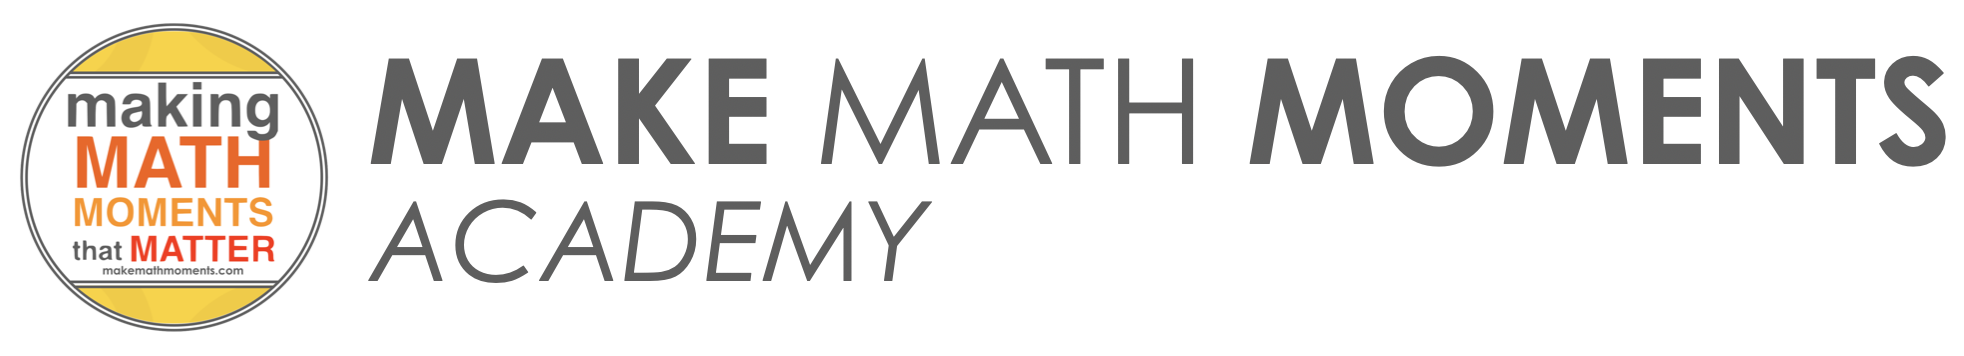 Make Math Moments Academy